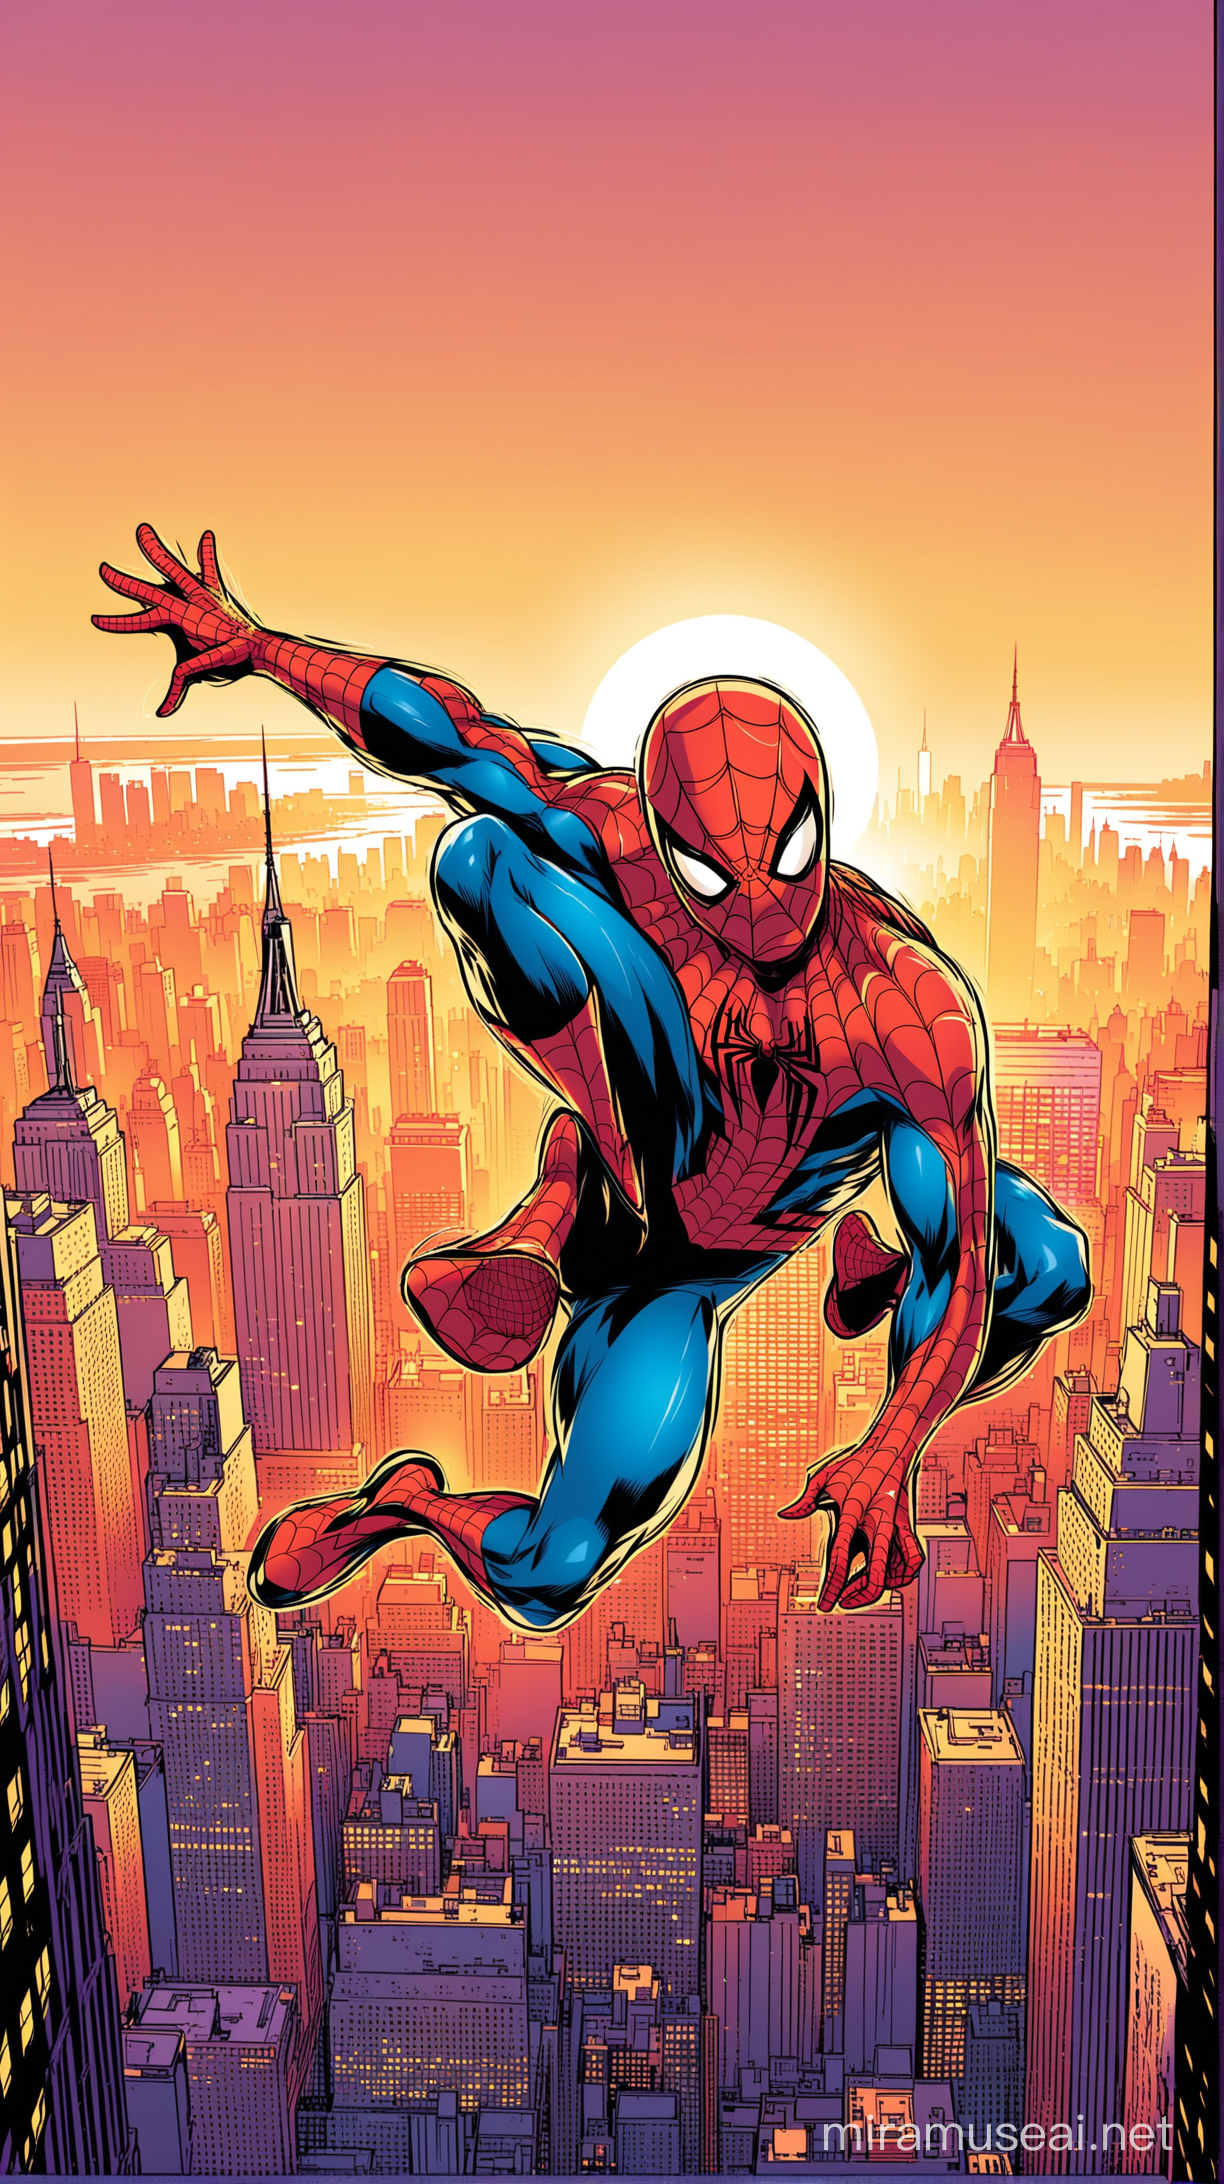 SpiderMan Swinging through New York City Skyline